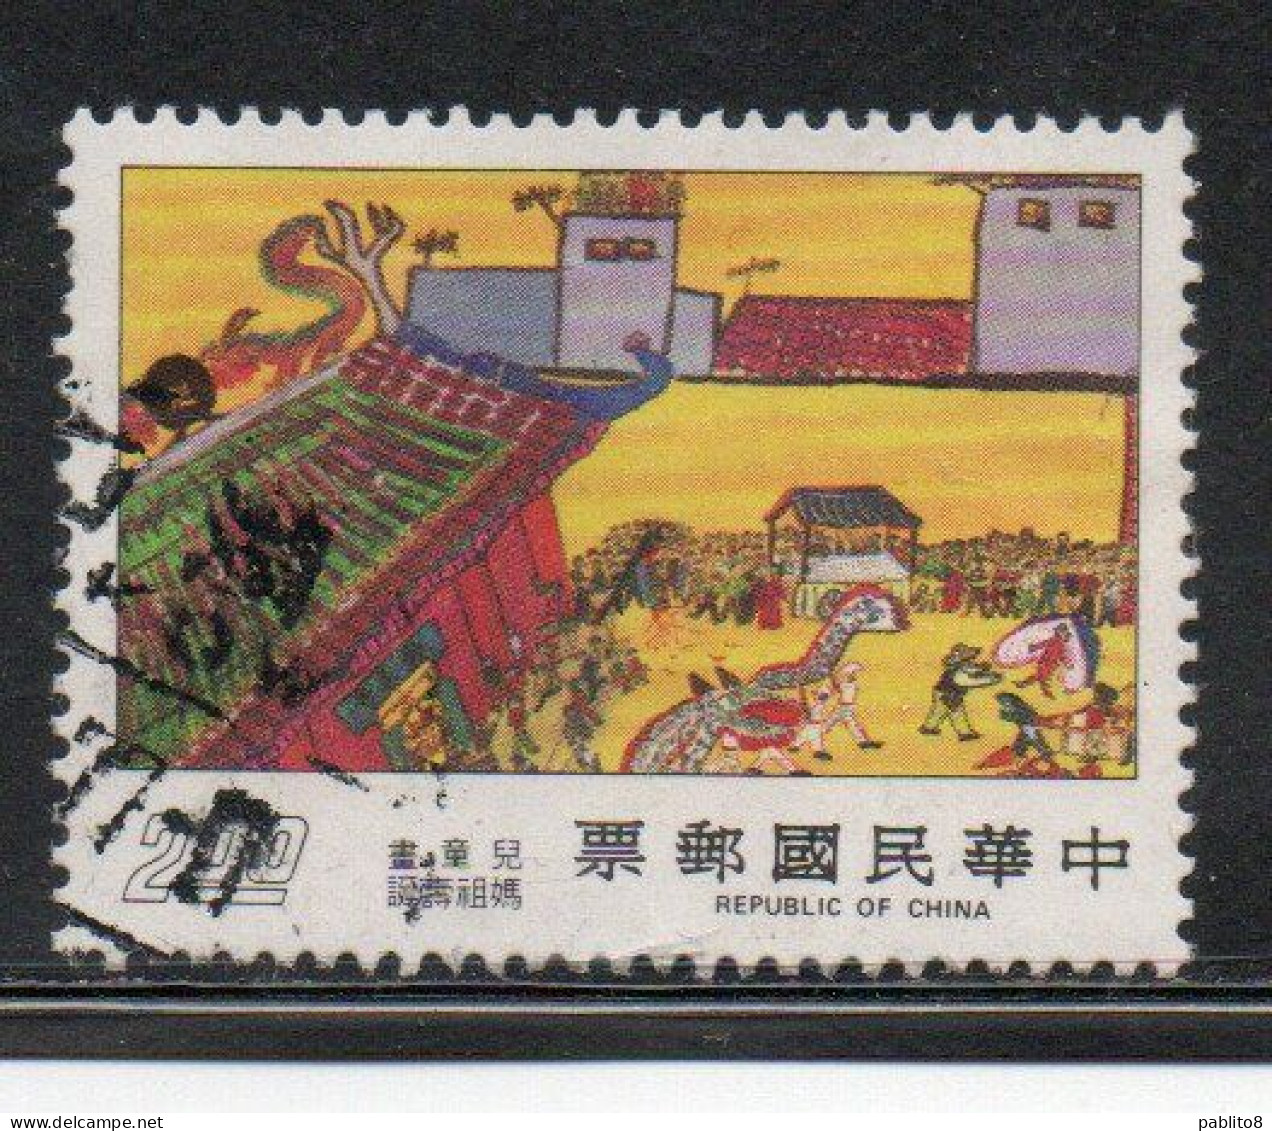 CHINA REPUBLIC CINA TAIWAN FORMOSA 1977 CHILDREN'S DRAWINGS SEA GODDESS FESTIVAL 2$ USED USATO OBLITERE' - Oblitérés